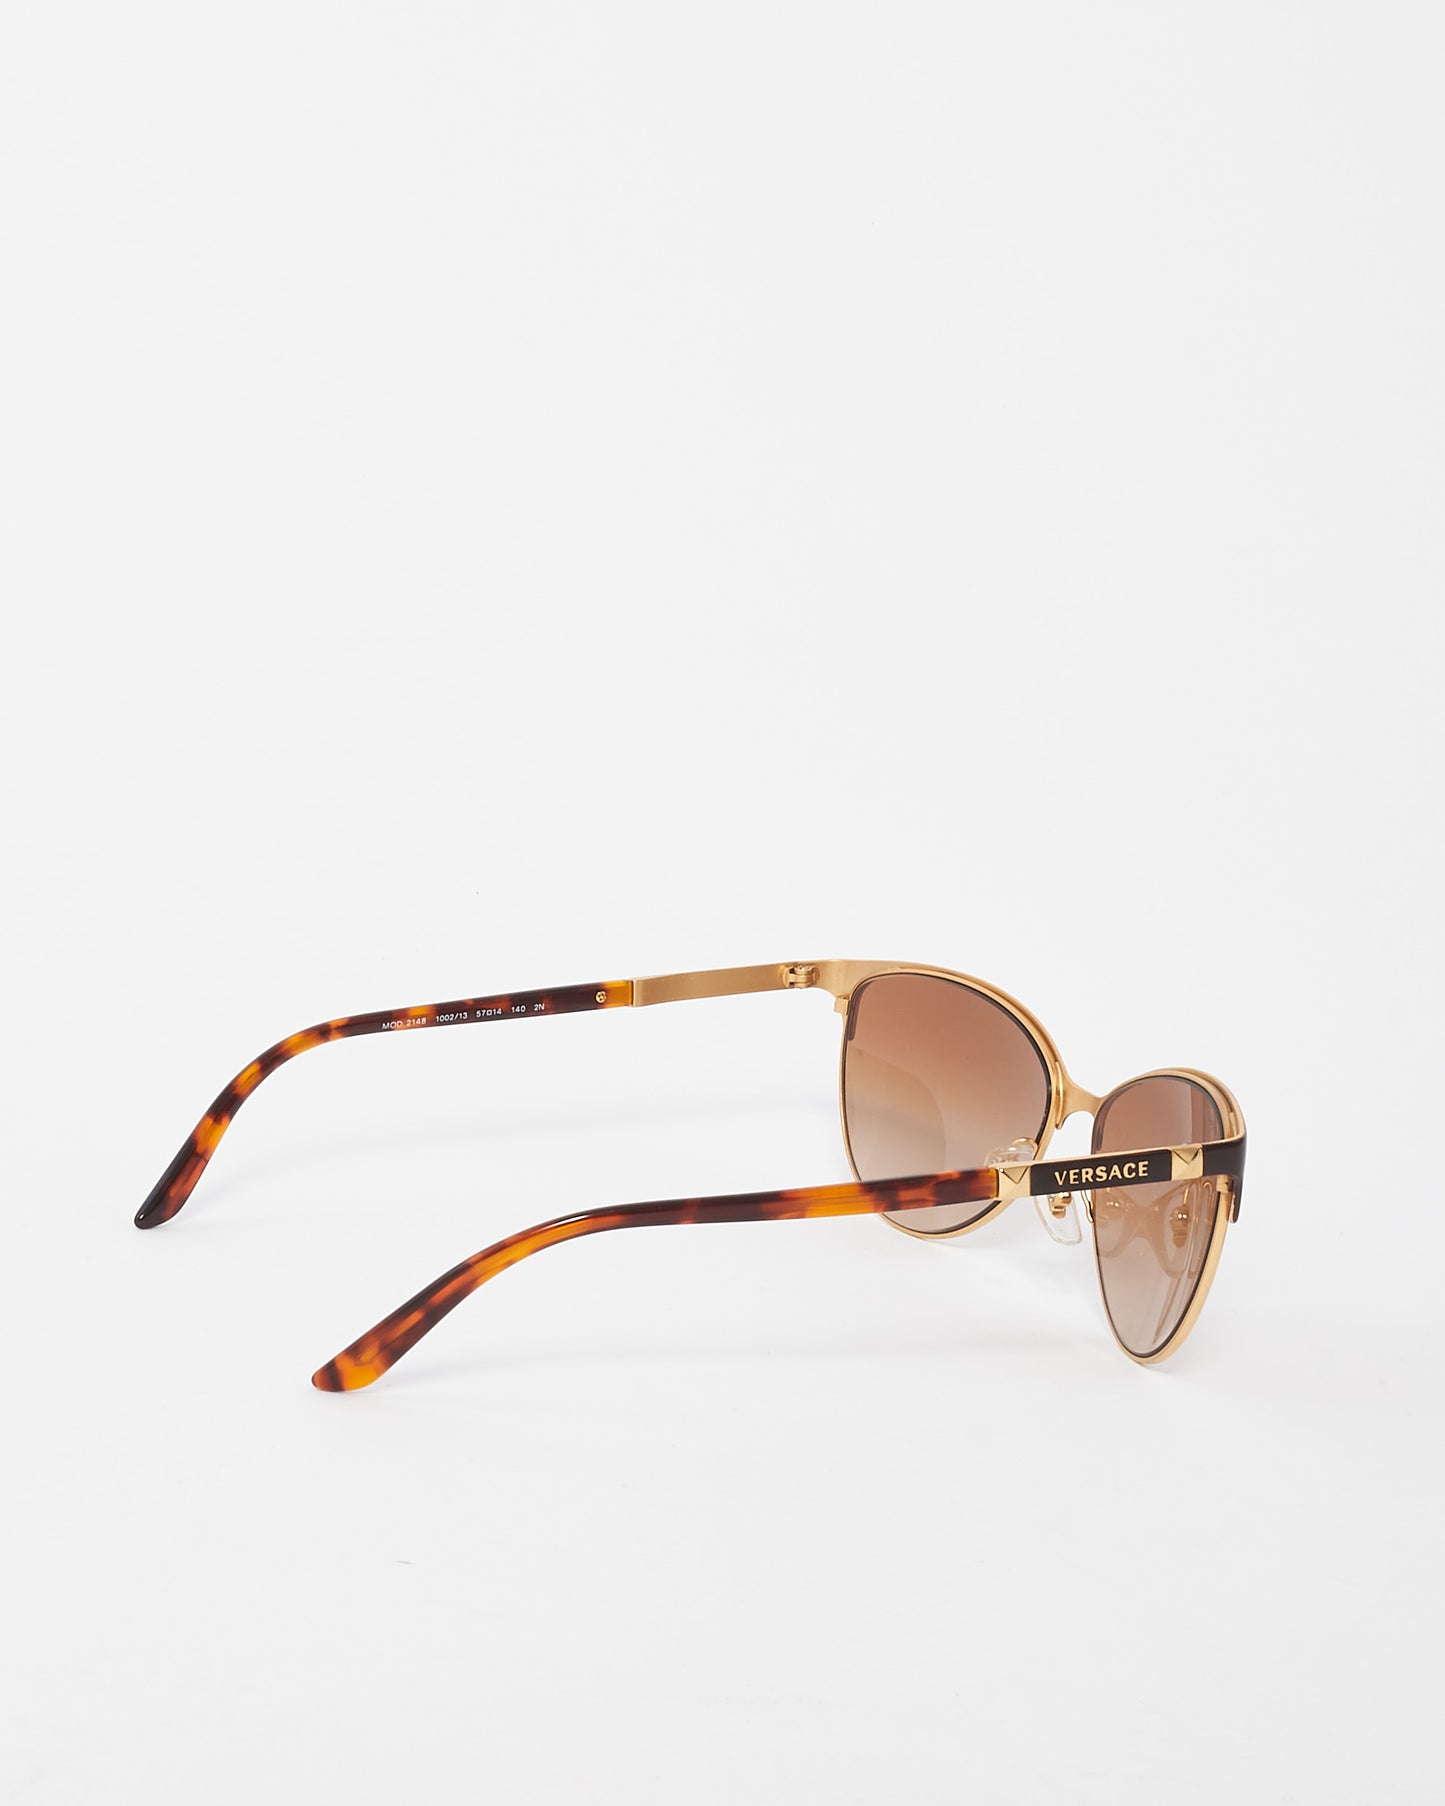 Versace Tortoise Brown/Gold 2148 Cat Eye Sunglasses